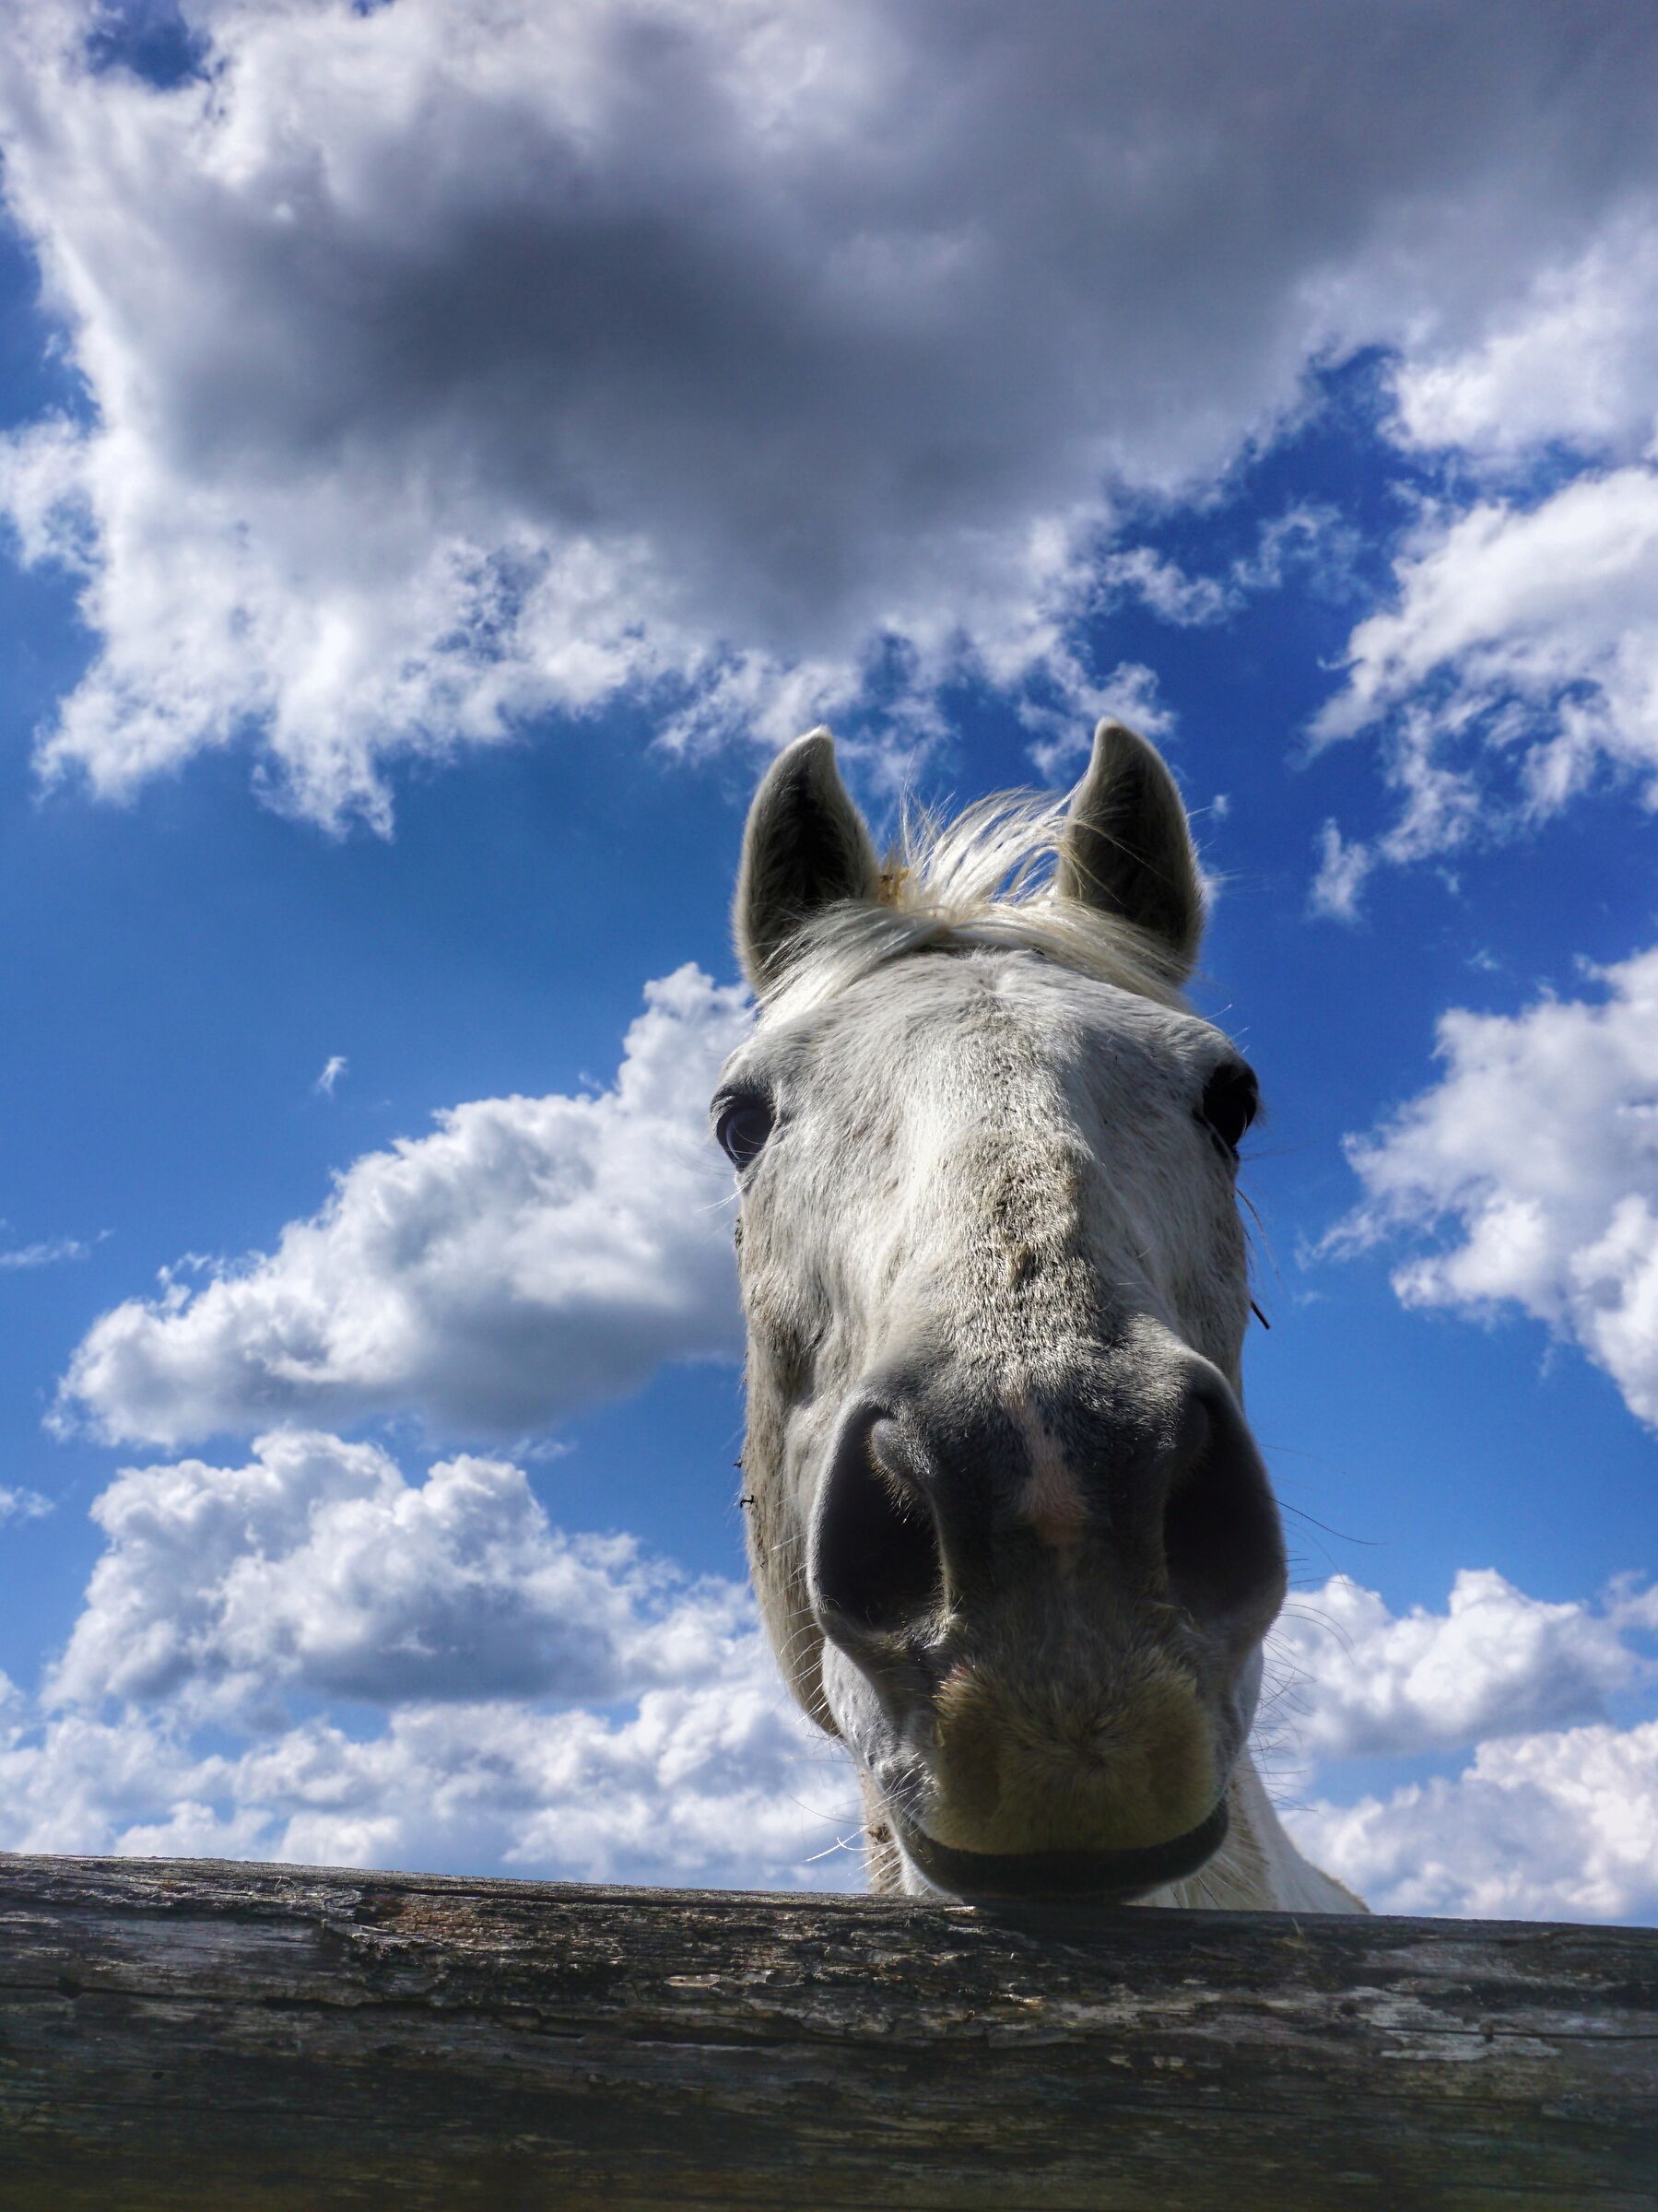 A horse in the clouds...